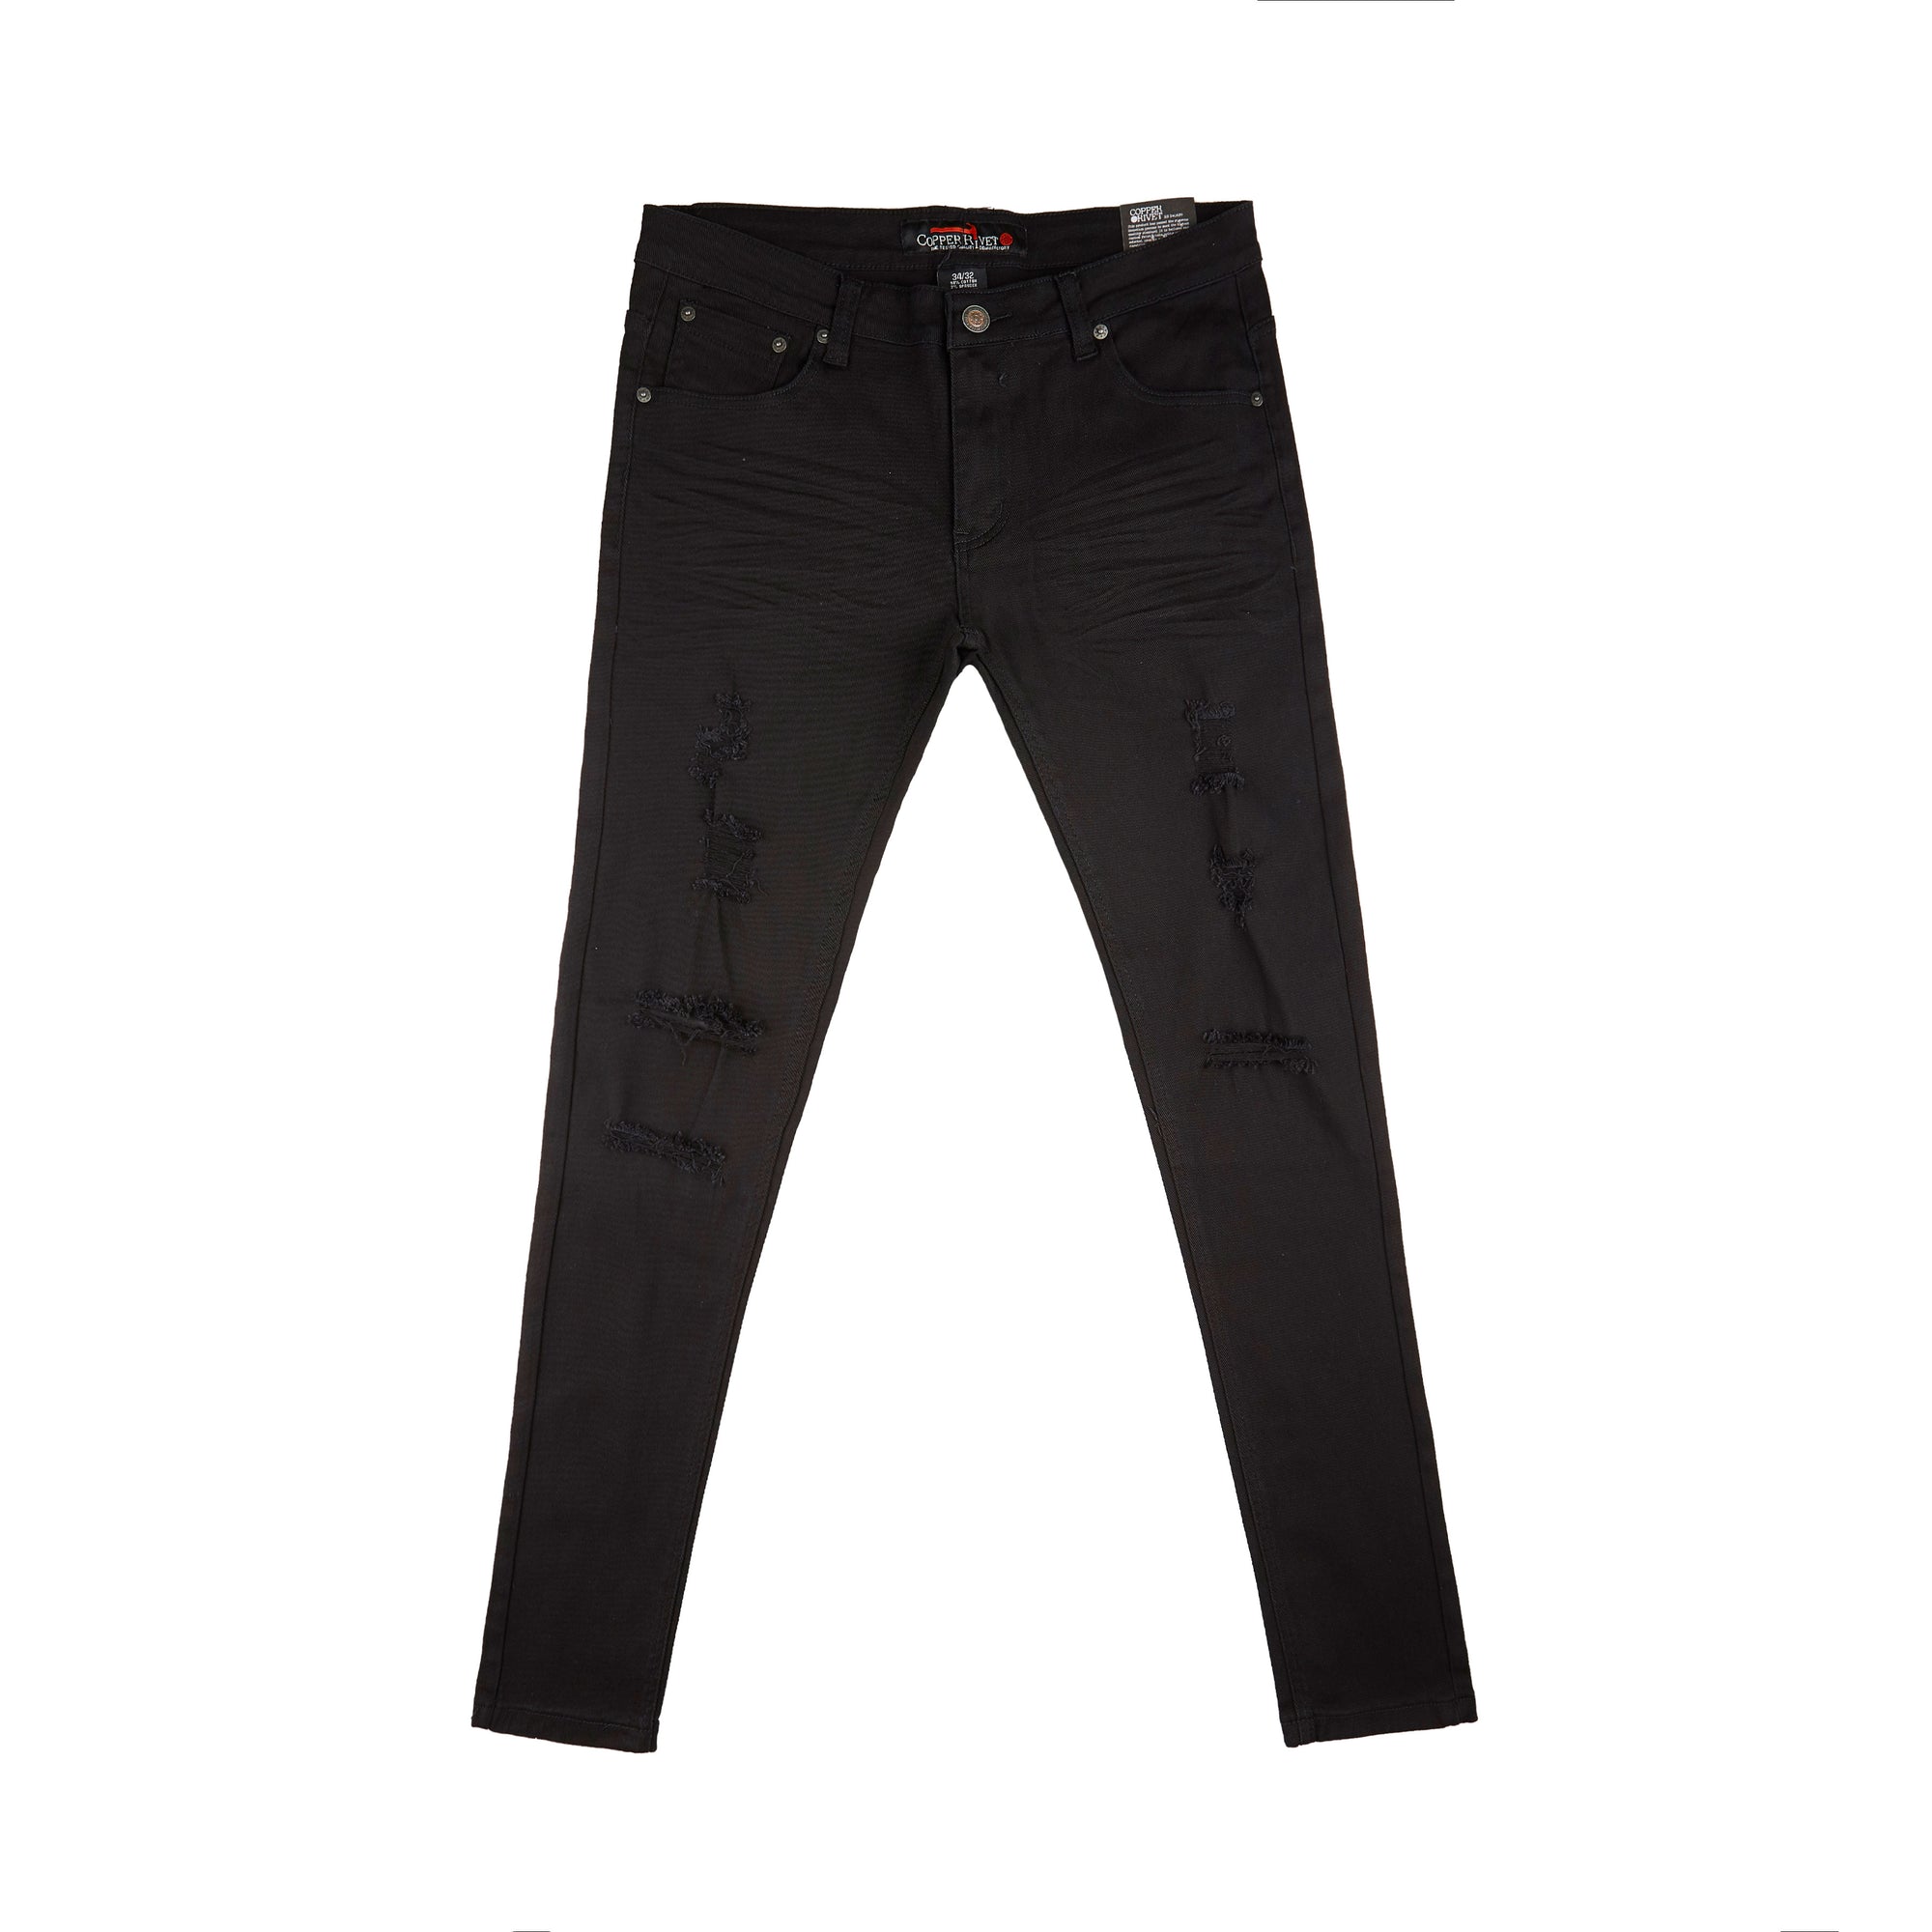 Basic Twill Ripped Jean Pants (Black)